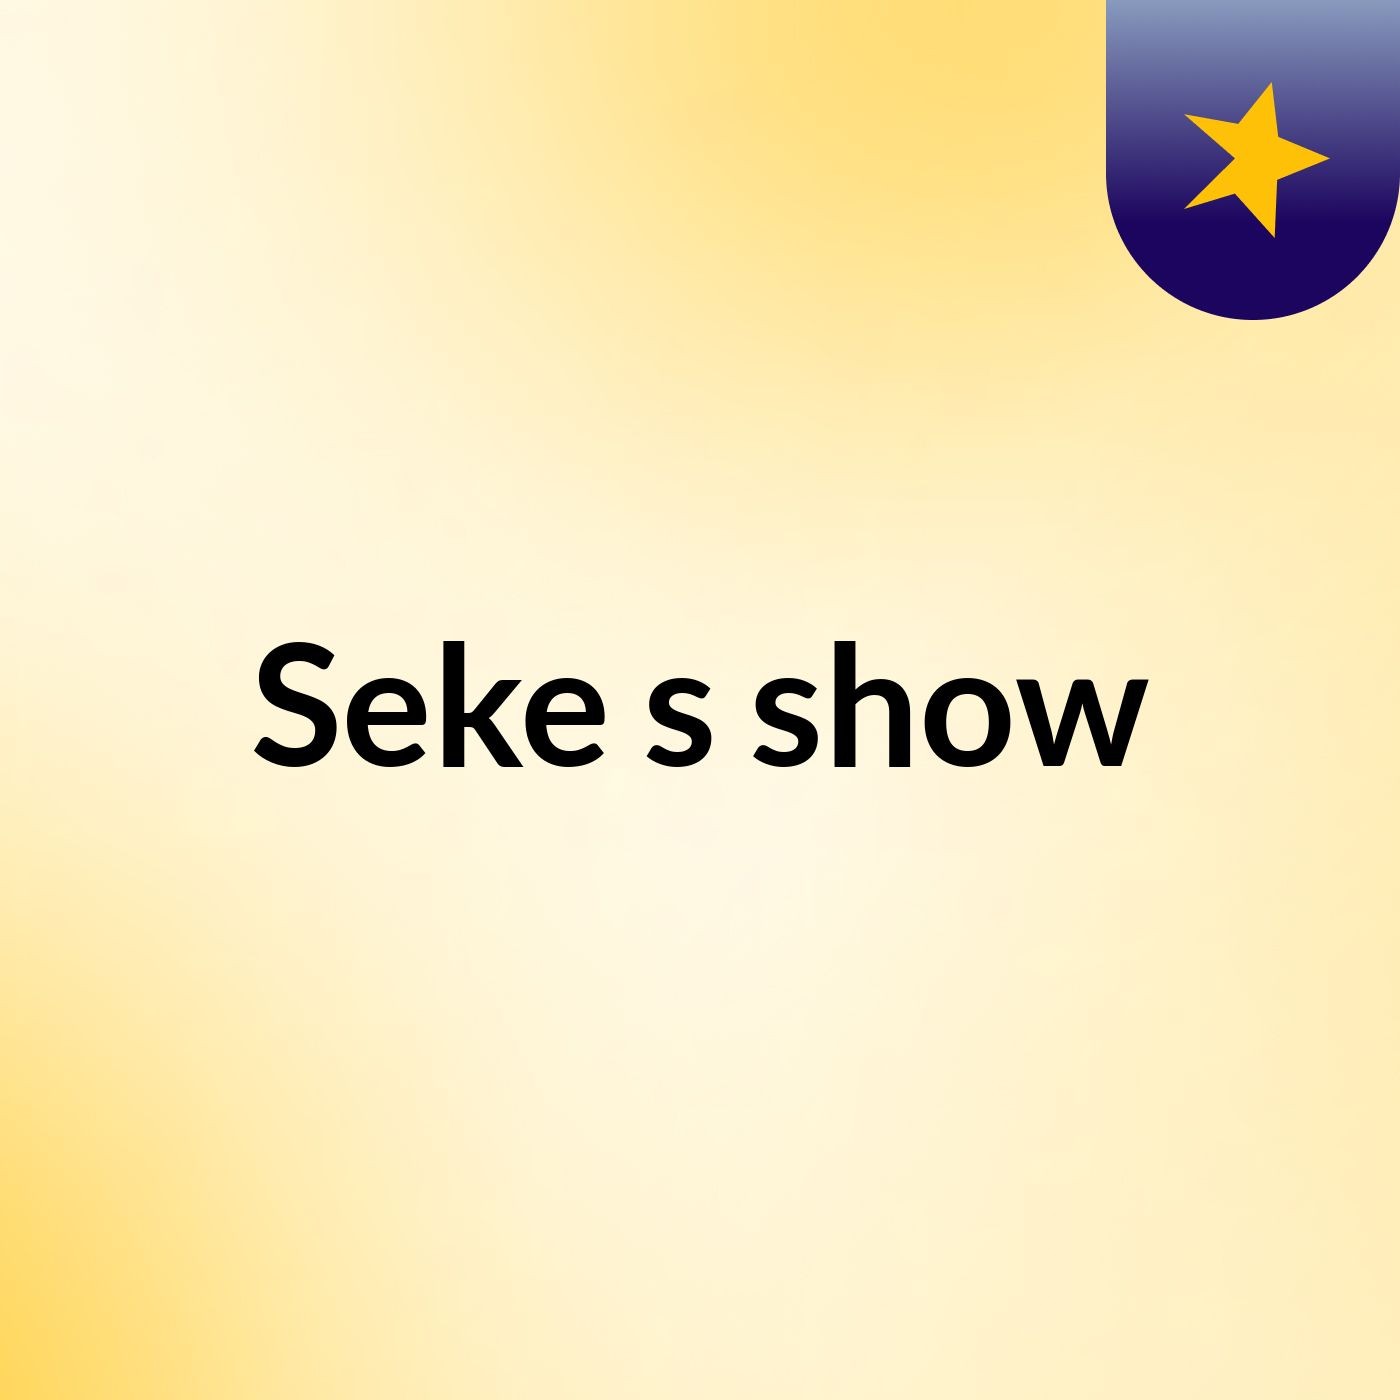 Seke's show